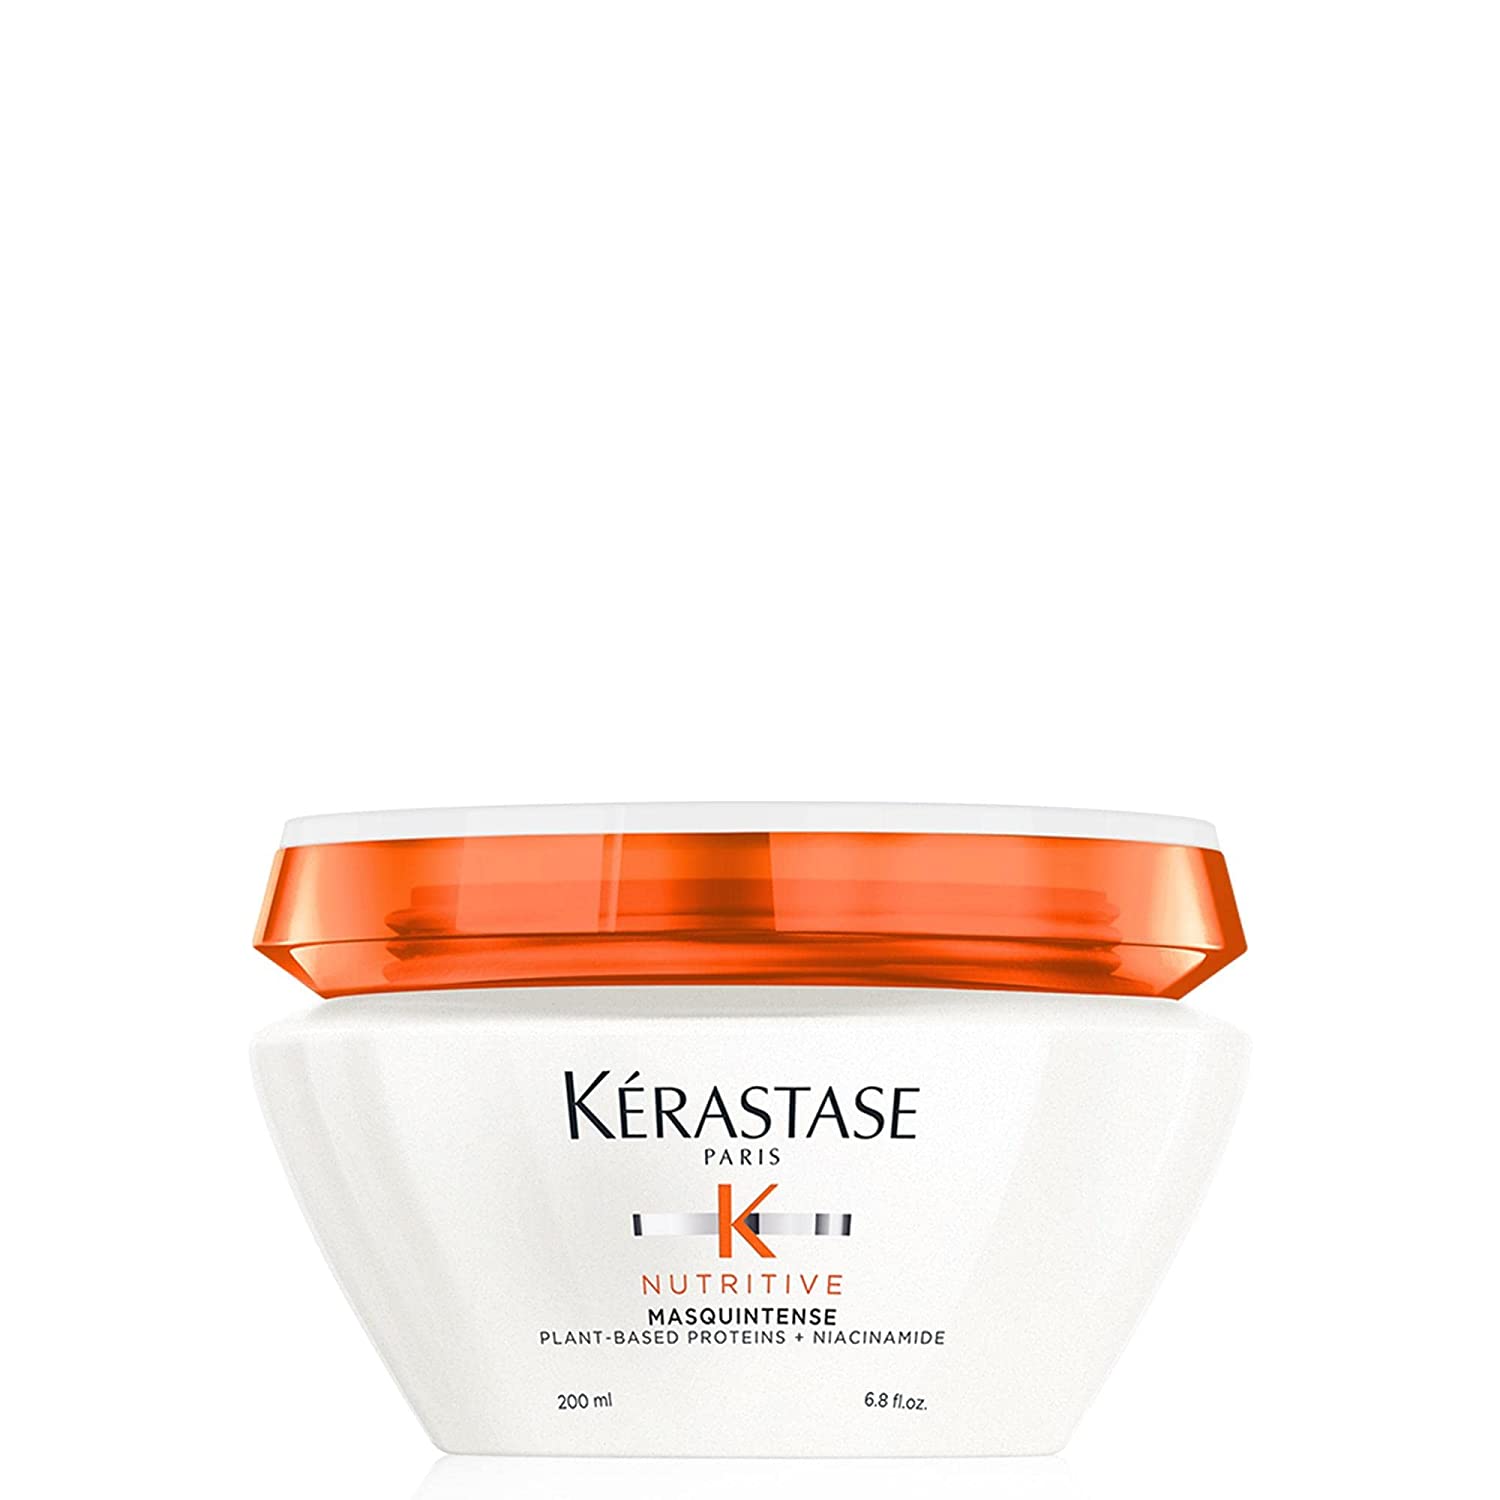 Kérastase Nutritive Hair Treatment for Very Dry, Fine to Medium Hair, Moisturising and Nourishing, No Parabens, Masquintense Deep Nutrition Soft Mask, 200 ml